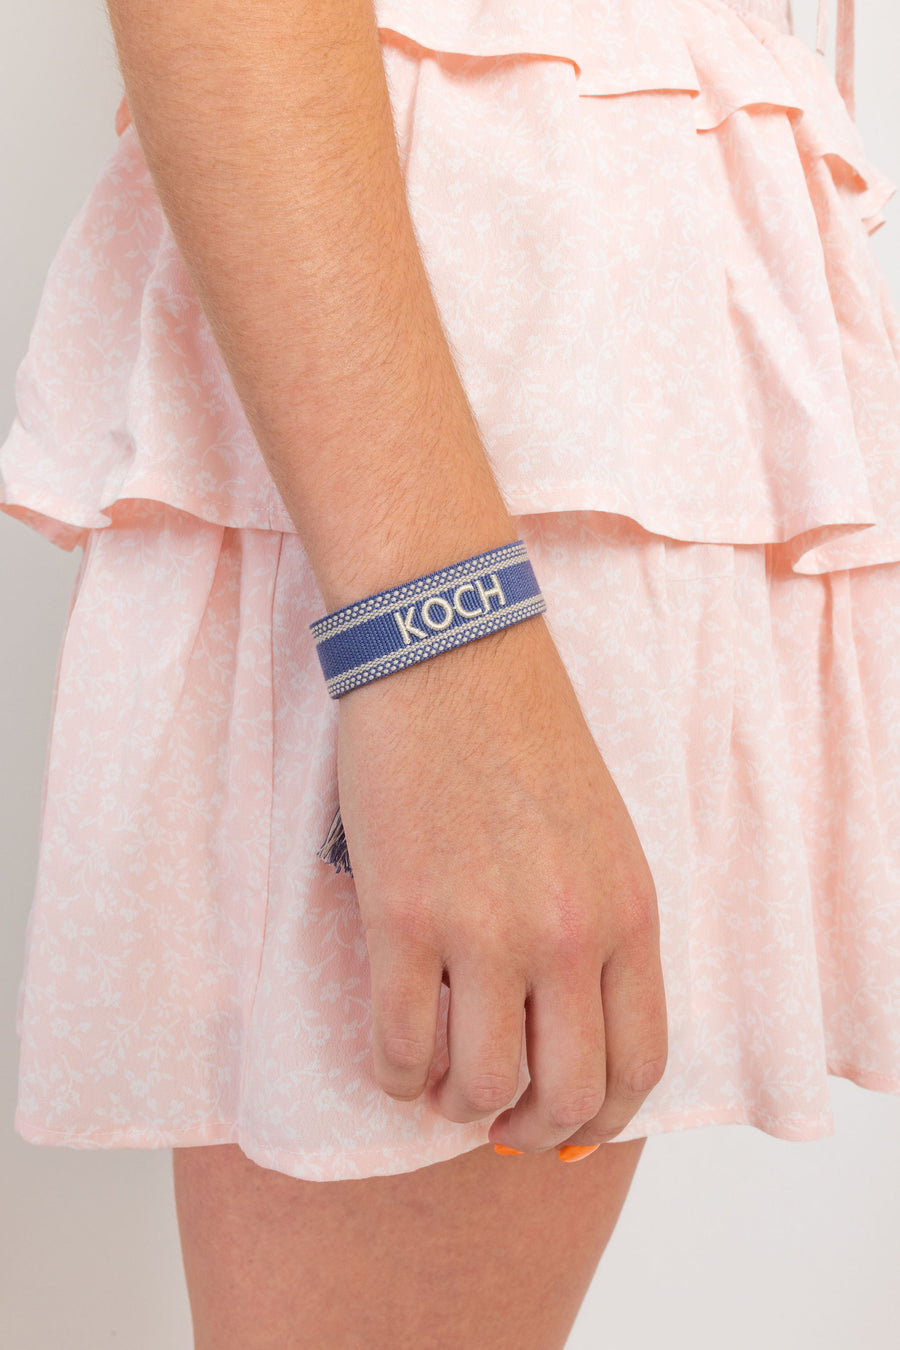 Koch Woven Bracelet *Limited*Edition*